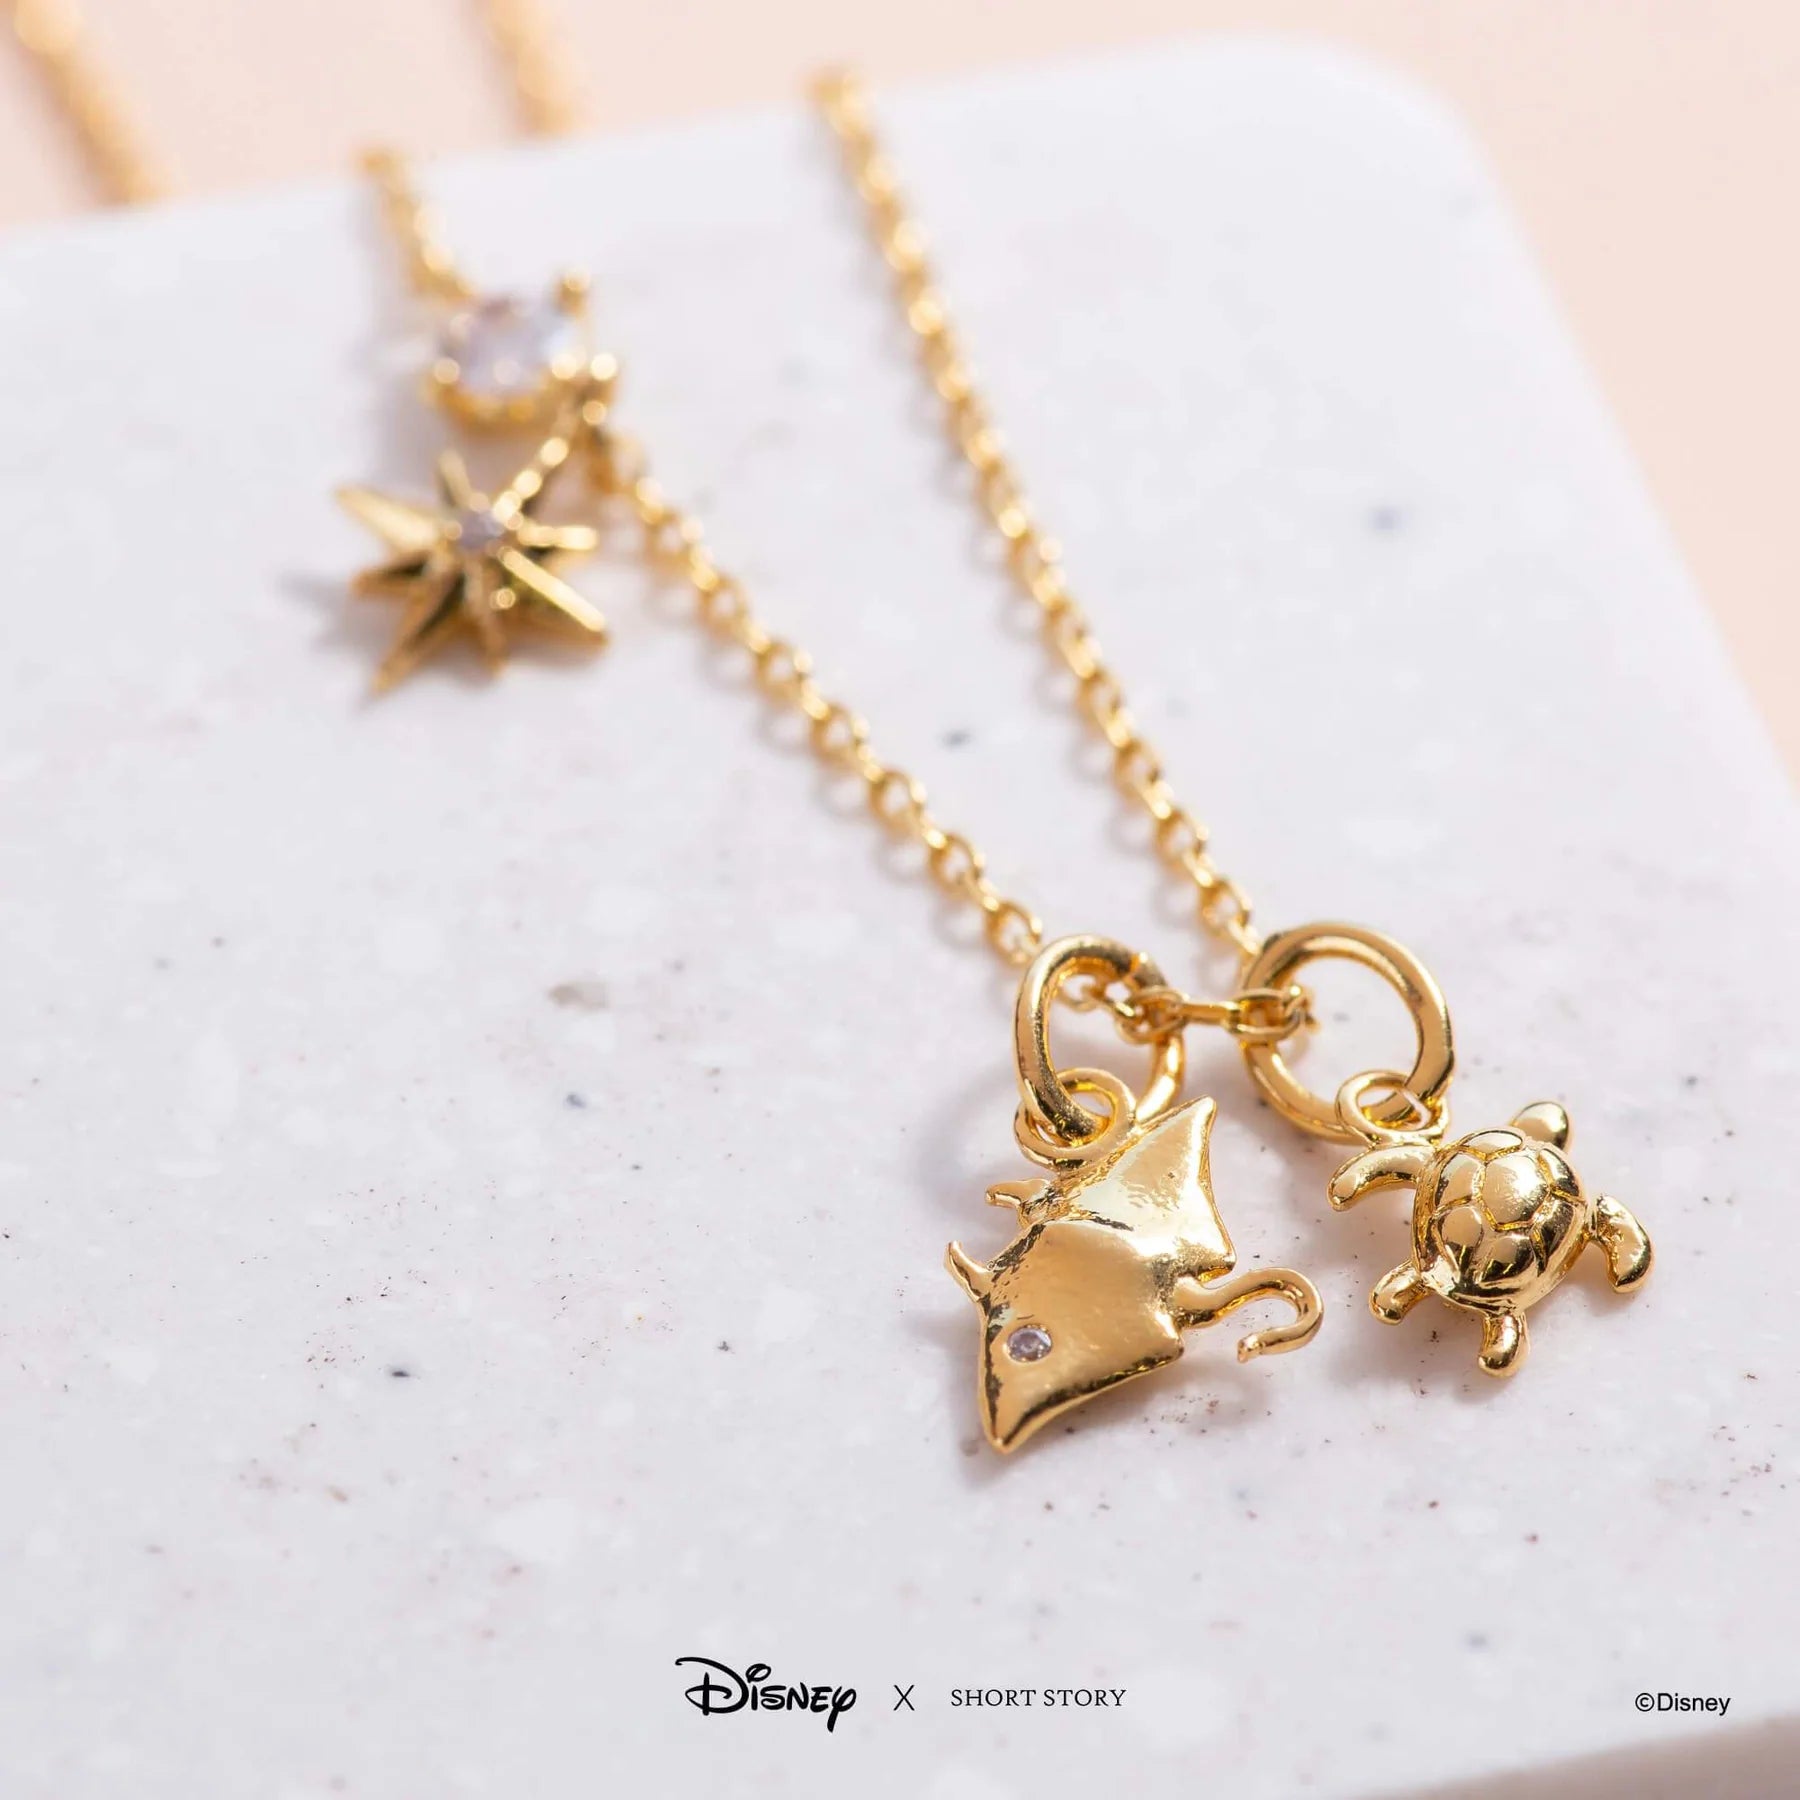 Short Story - Disney Necklace Moana Gold